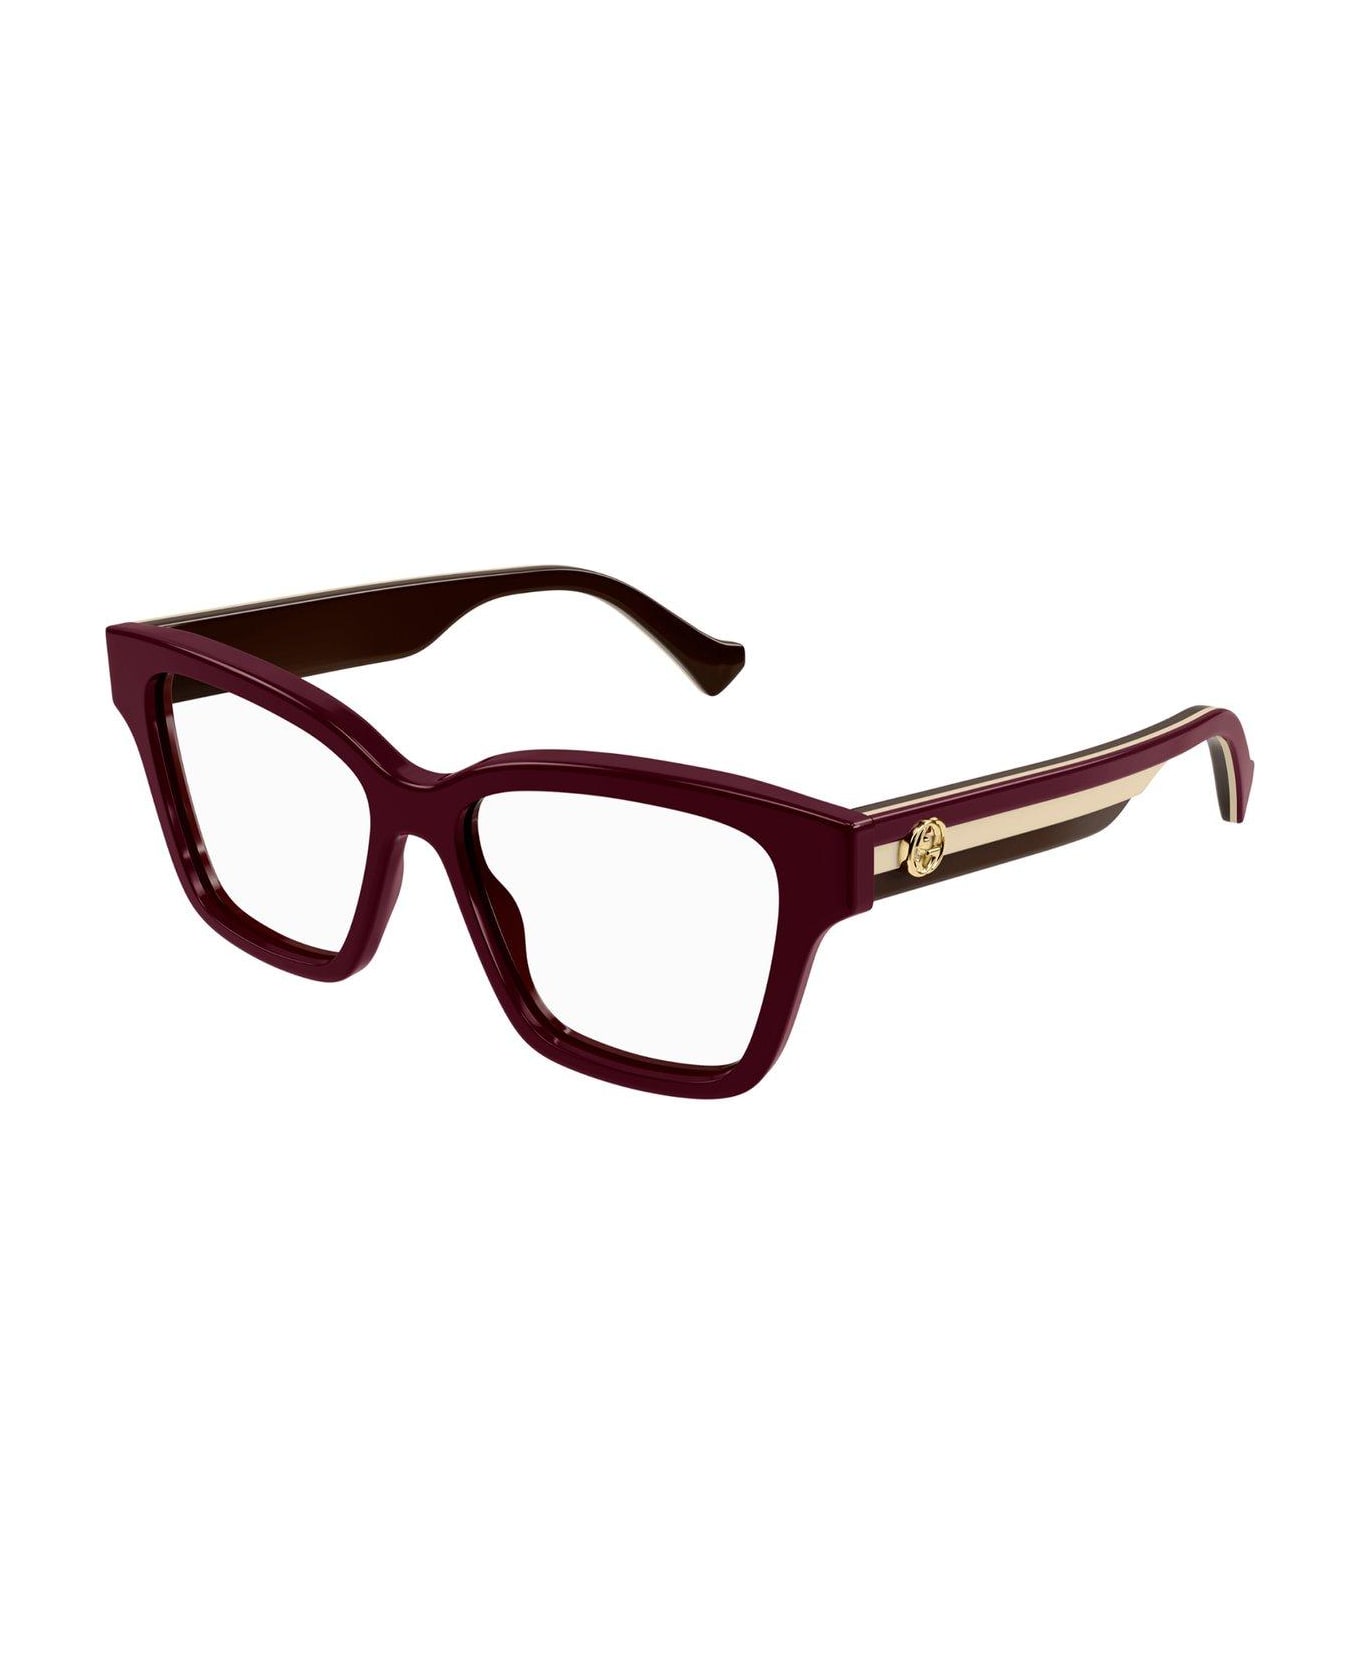 Gucci Eyewear Rectangle Frame Glasses - 005 burgundy burgundy tra